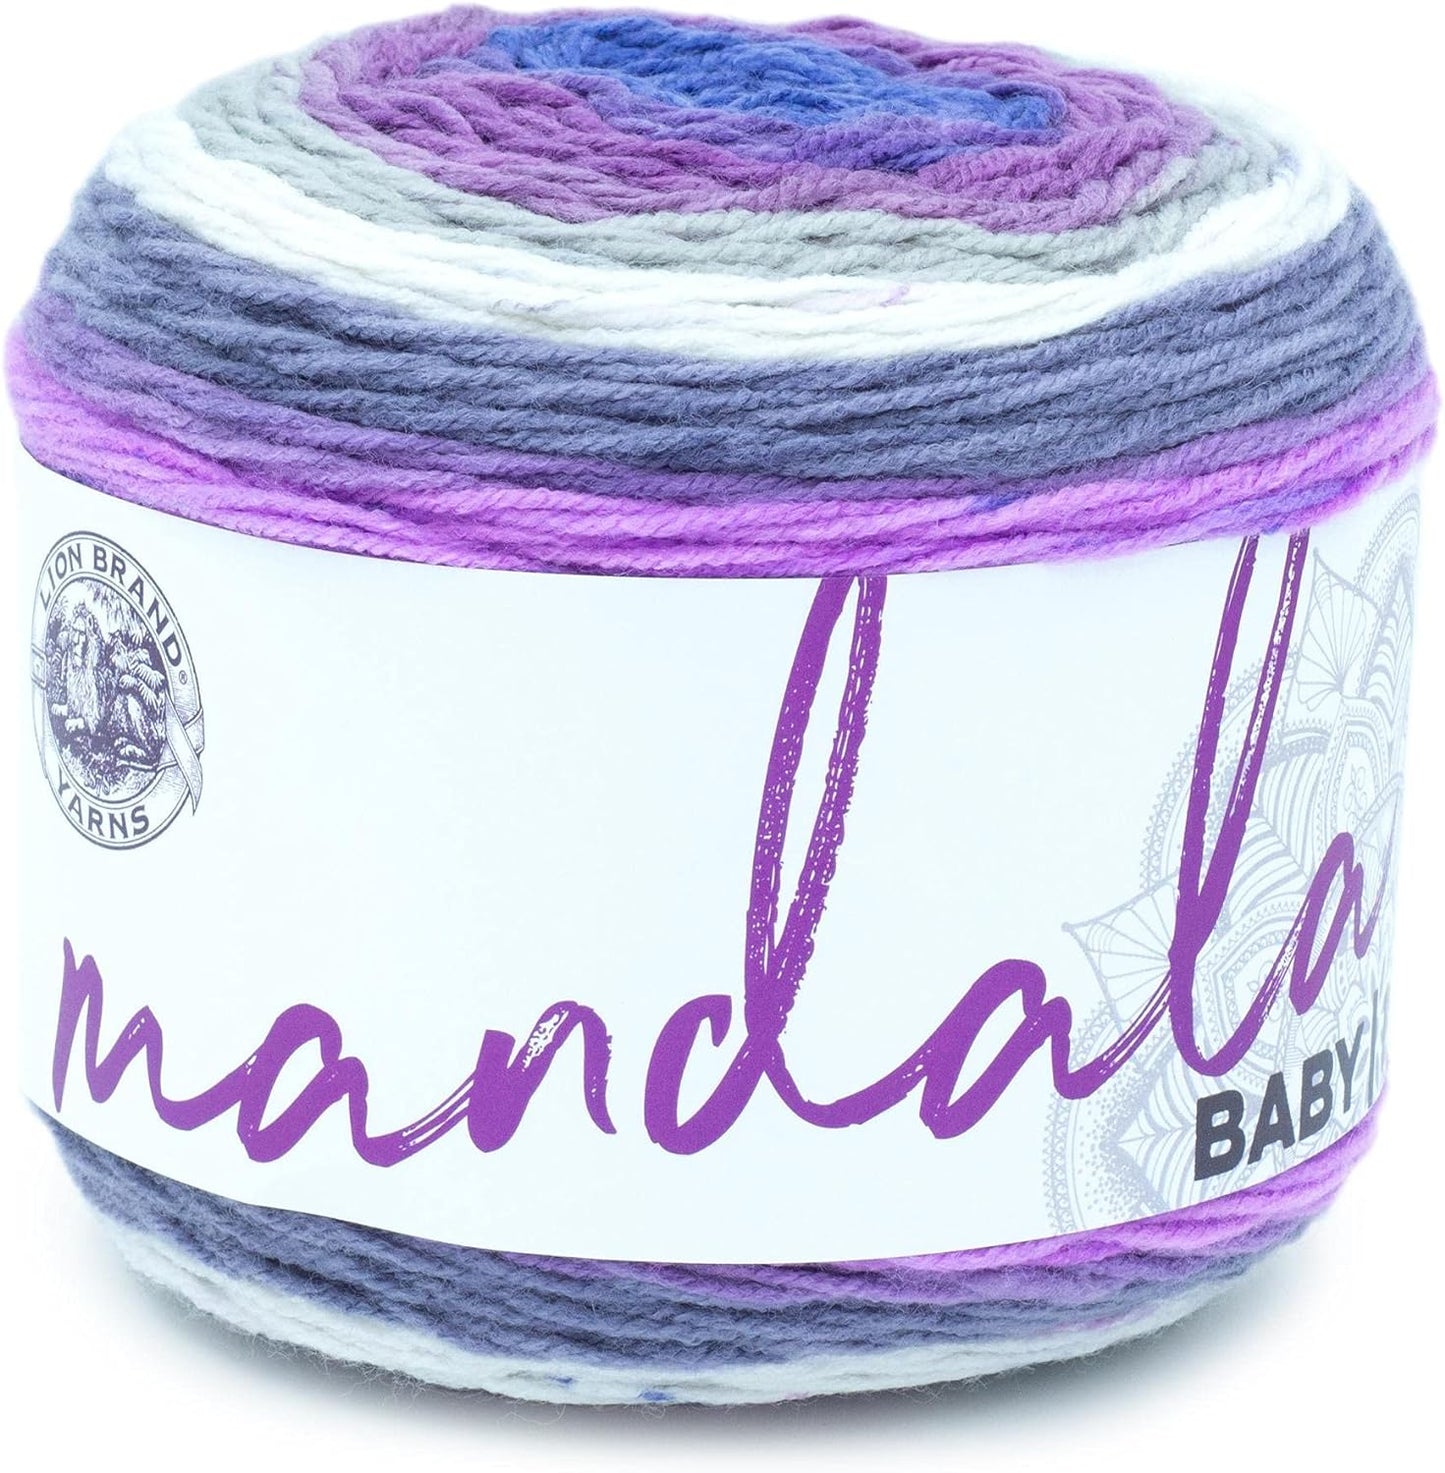 (1 Skein) Mandala Baby Yarn, Narnia, 1770 Foot (Pack of 1)